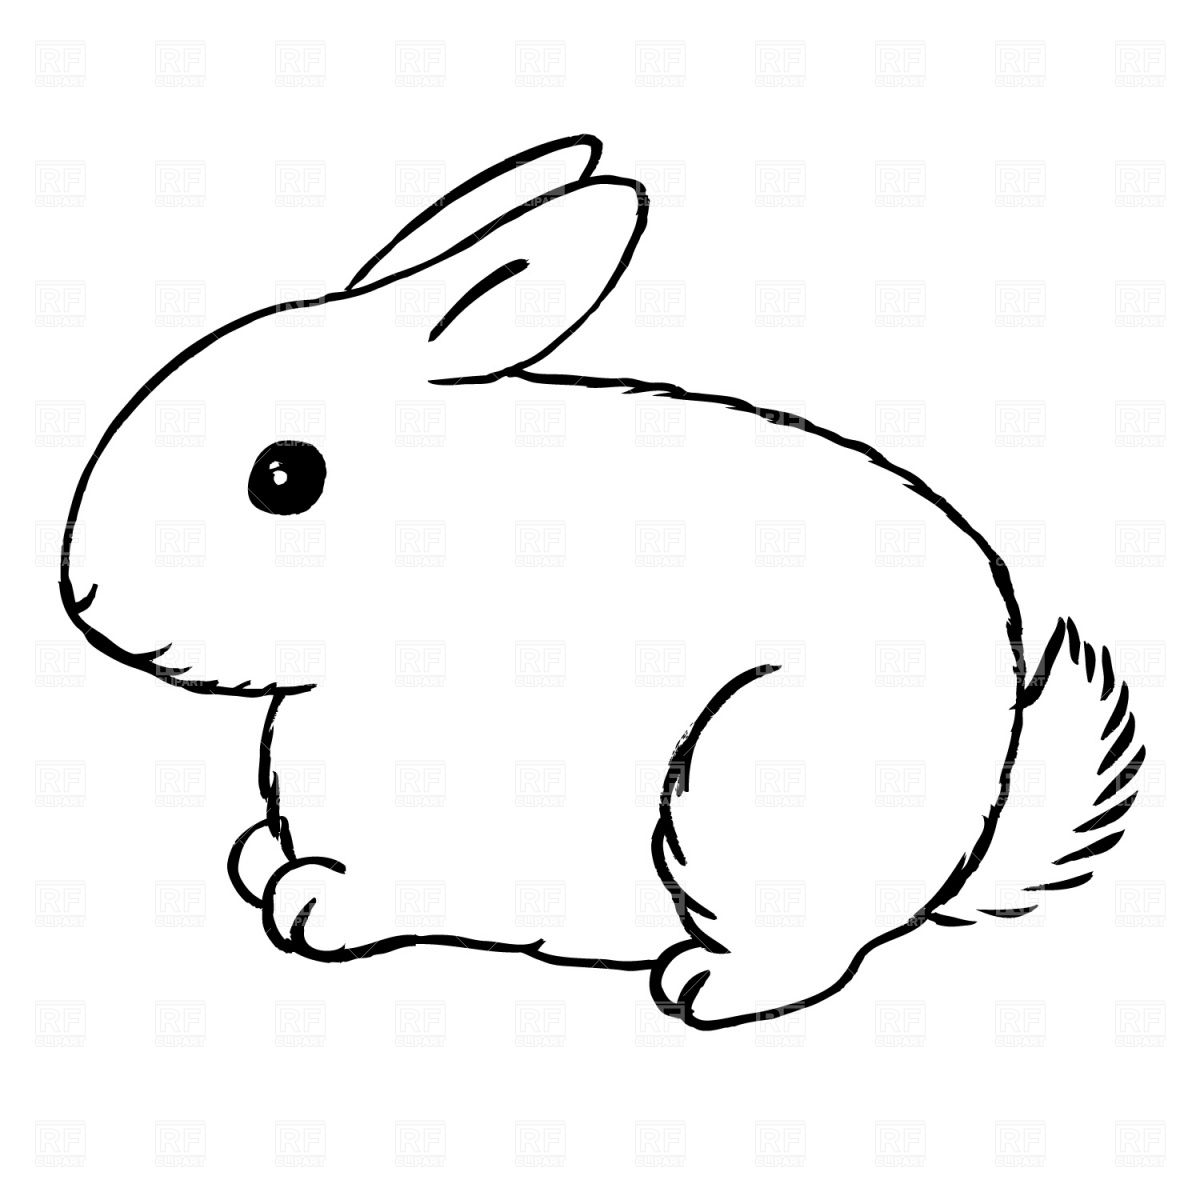 drawings of rabbits and bunnies.